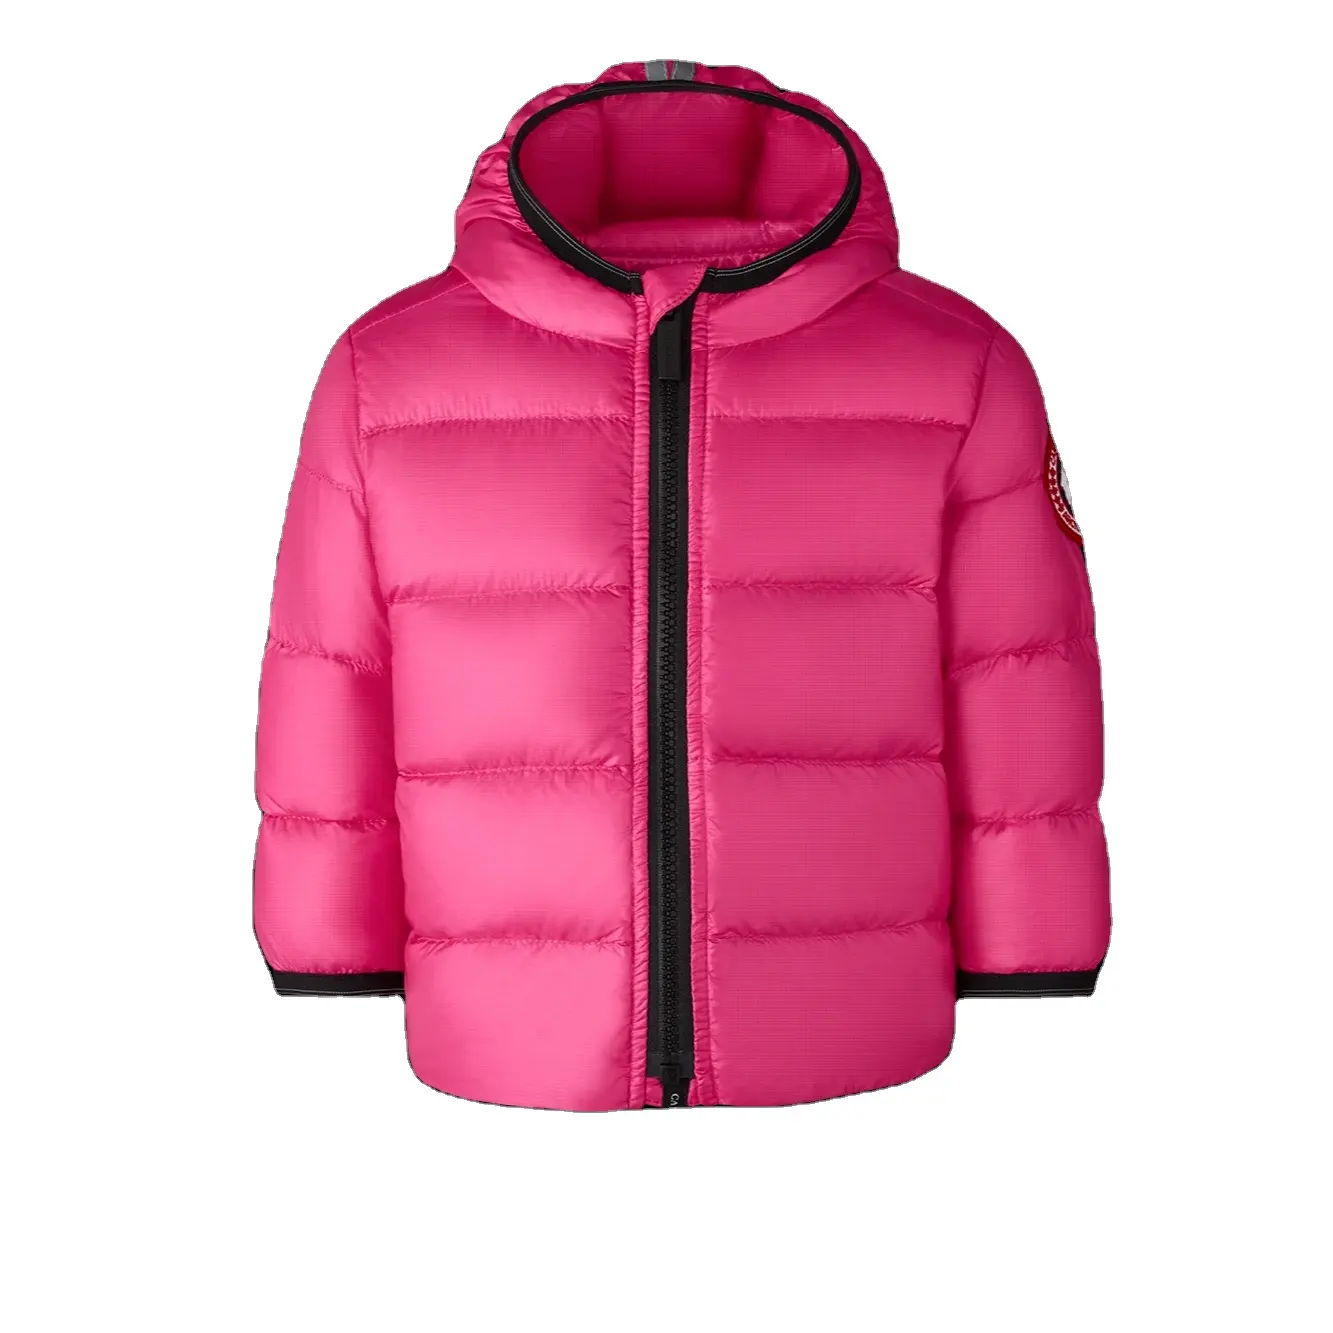 Jaqueta puffer acolchoada infantil, jaqueta de inverno de alta qualidade, macia, com capuz, cor sólida, casaco de bebê